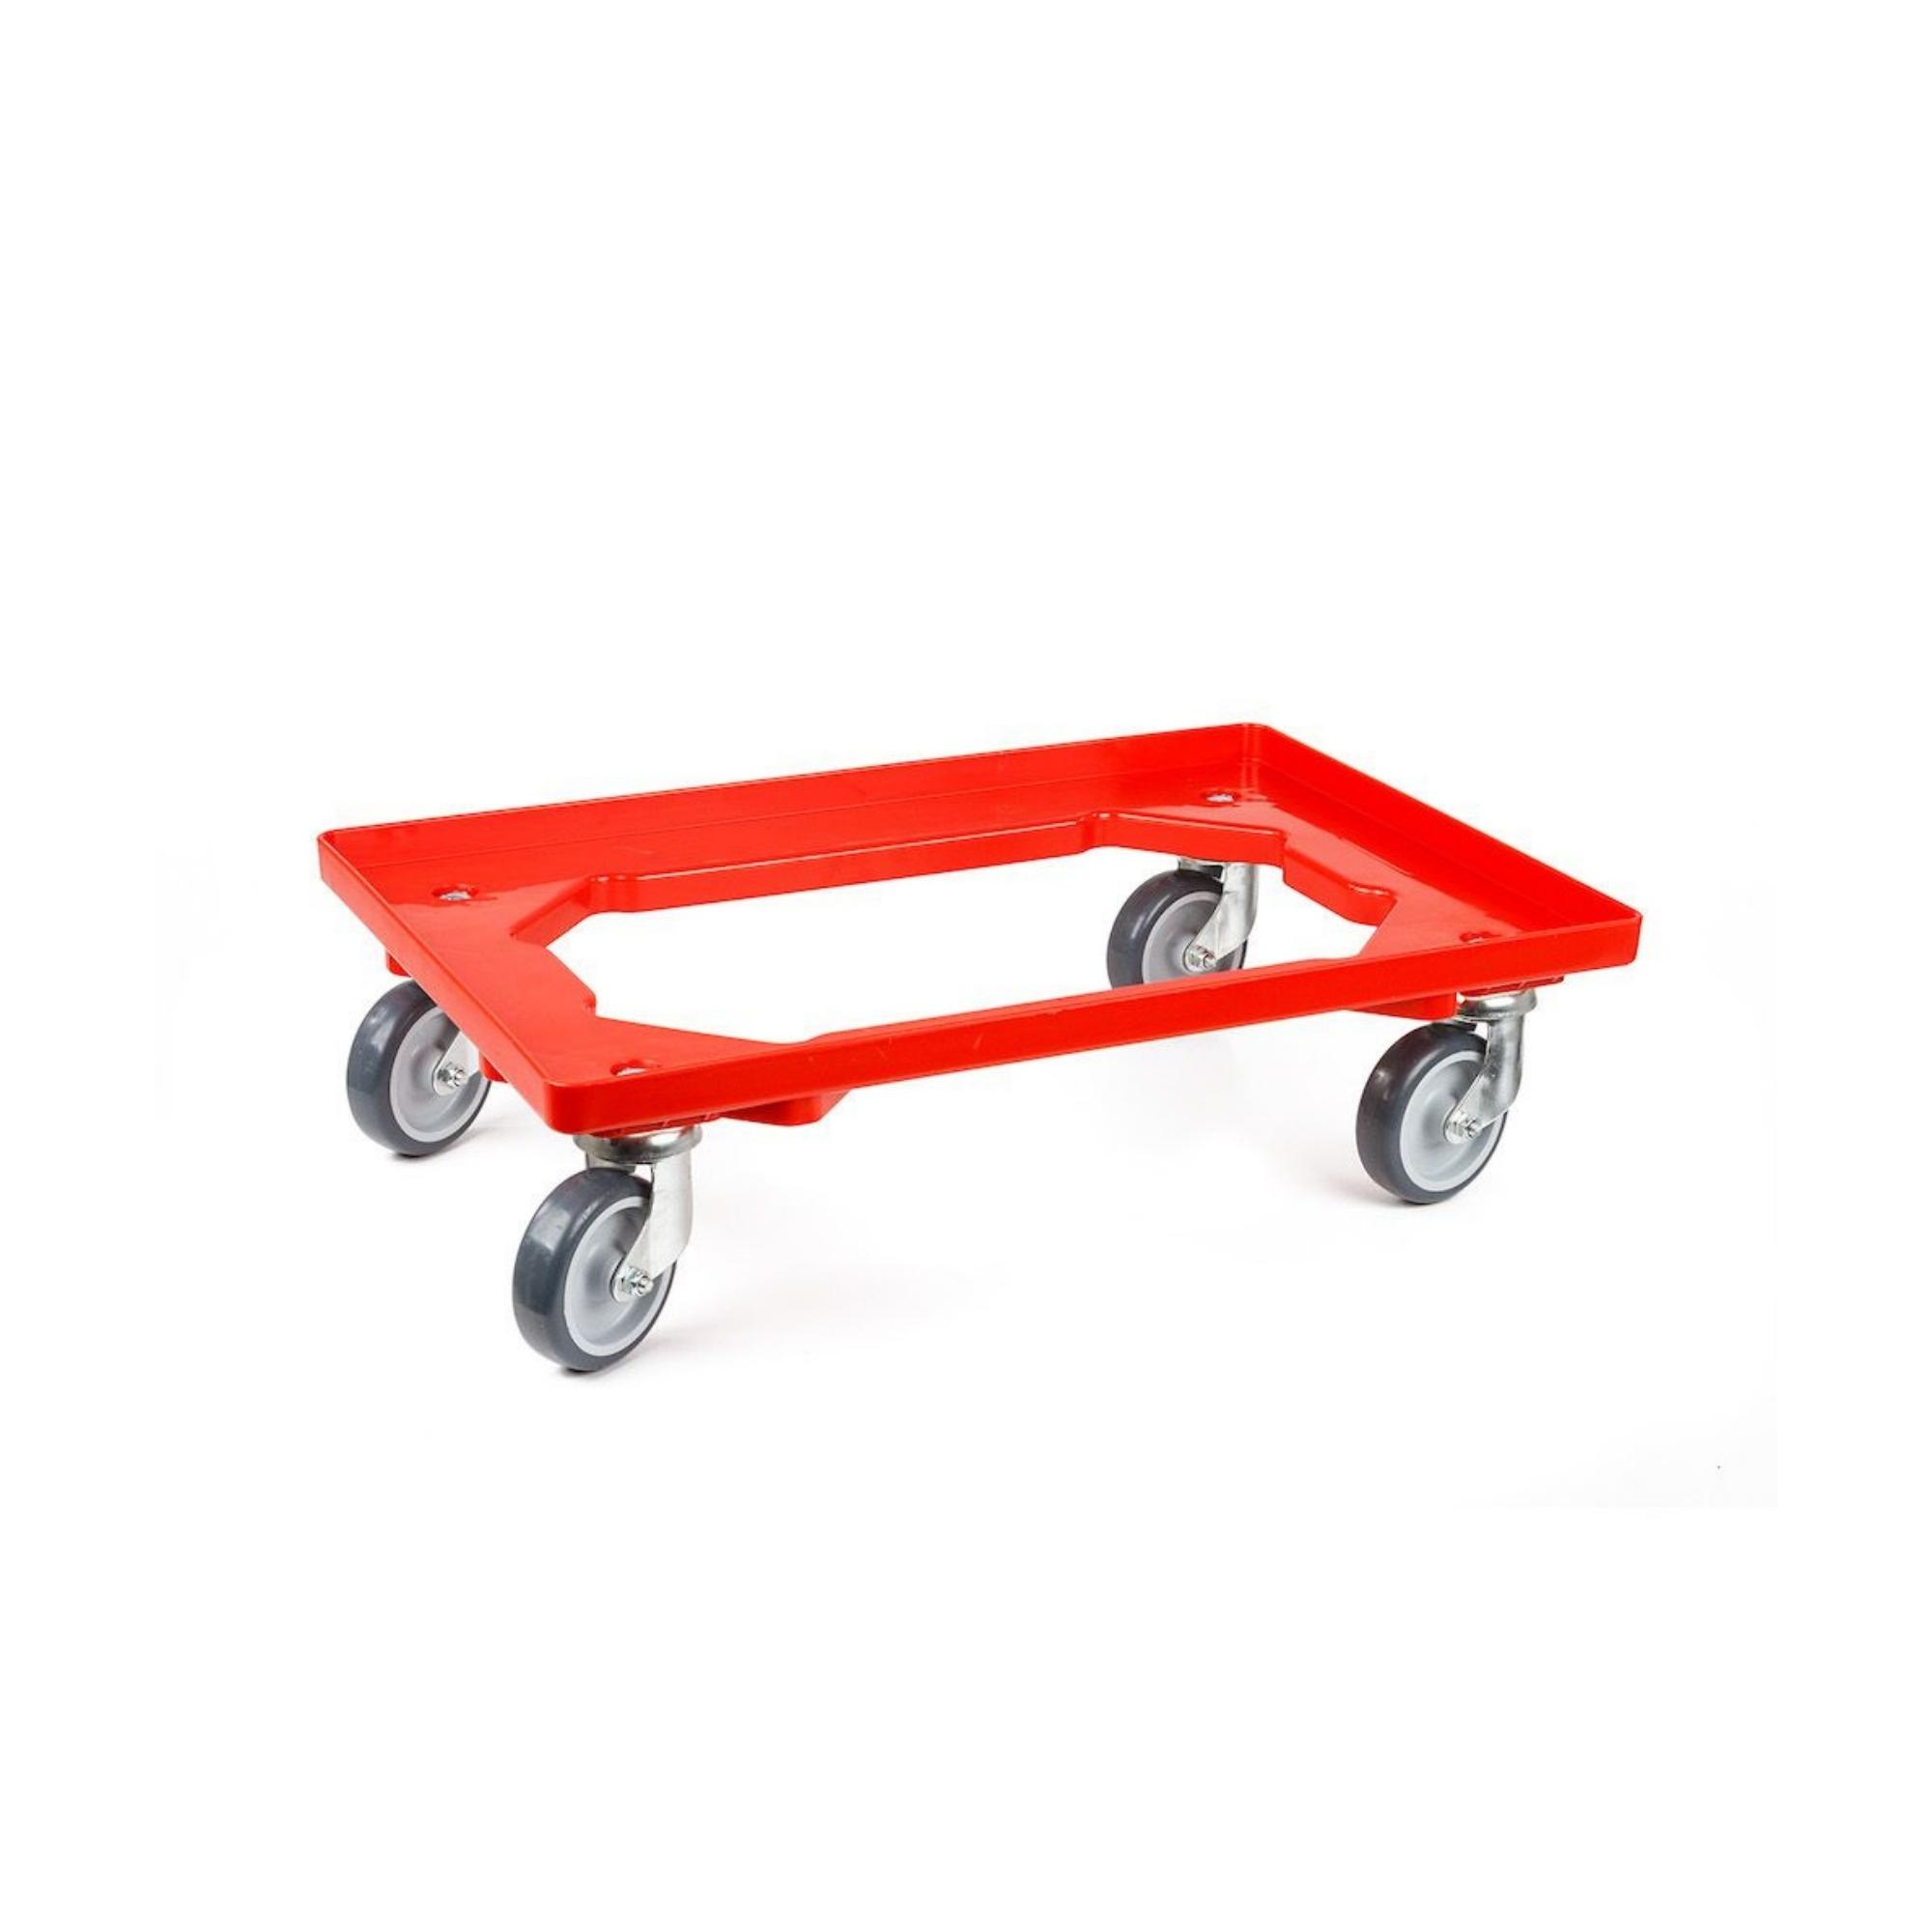 SparSet 2x Transportroller für Euroboxen 60x40cm mit Gummiräder rot | Offenes Deck | 2 Lenkrollen & 2 Bockrollen | Traglast 300kg | Kistenroller Logistikroller Rollwagen Profi-Fahrgestell